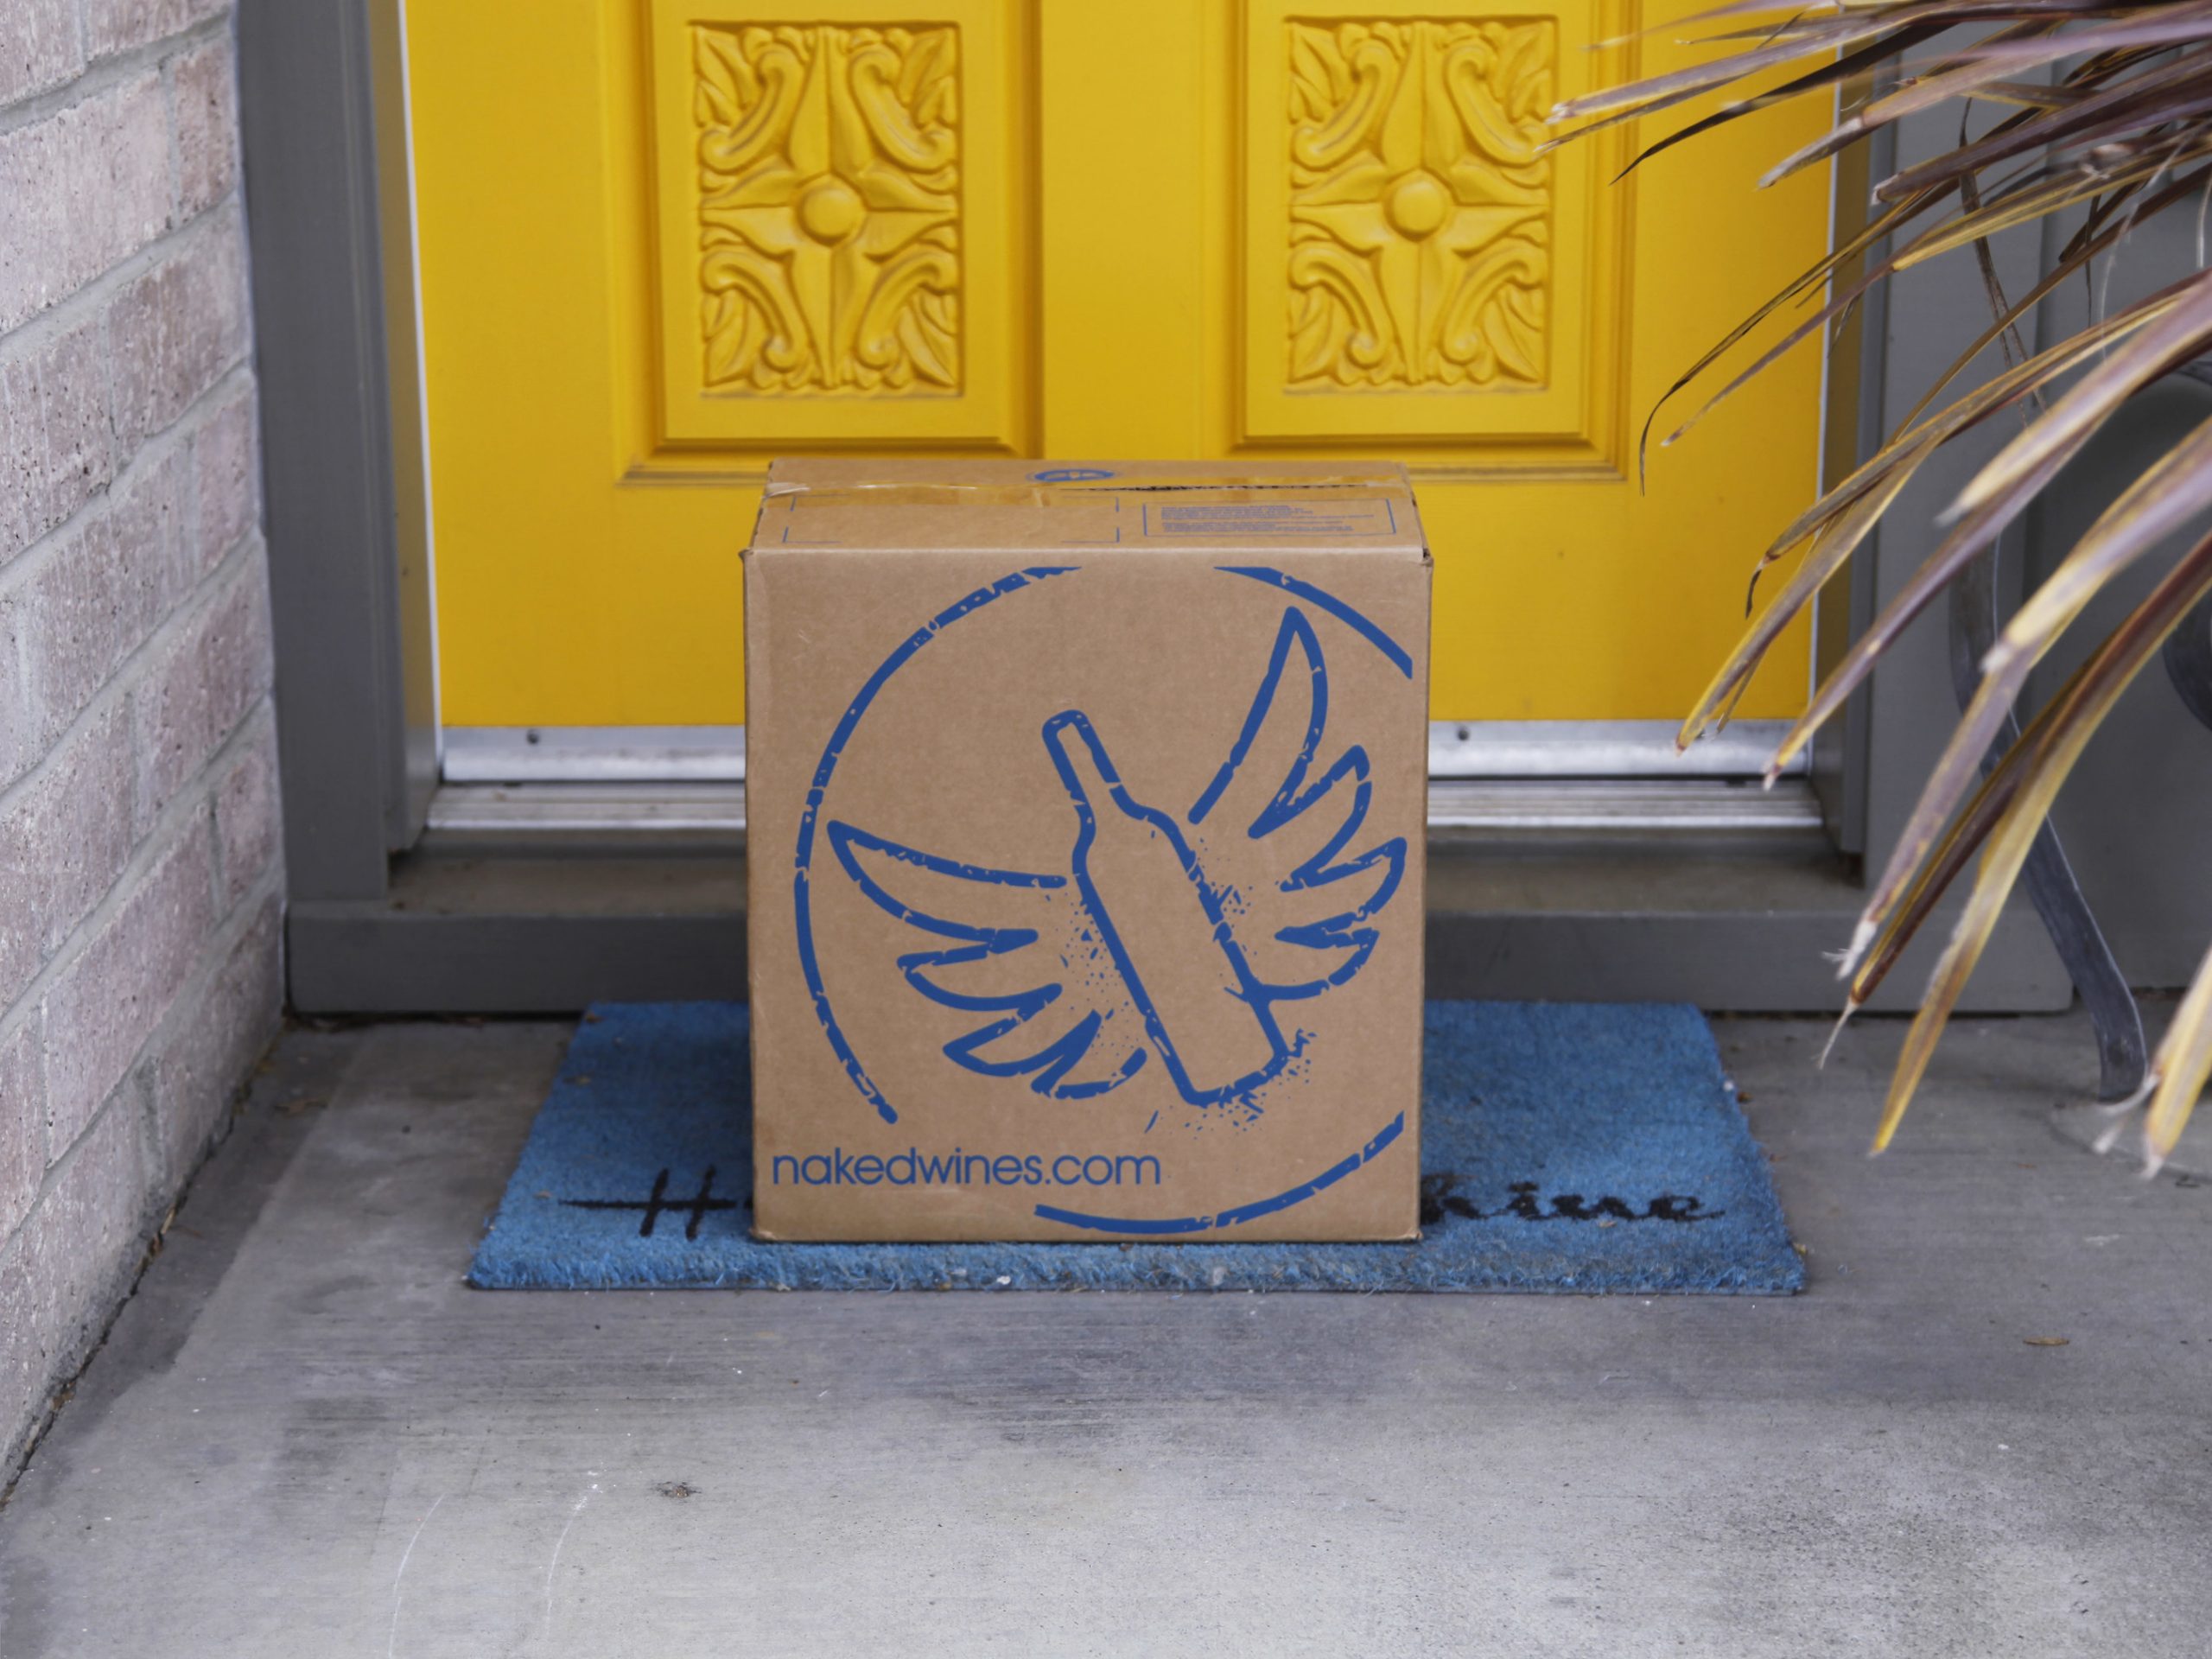 Nakedwinescom_DoorStep_Delivery